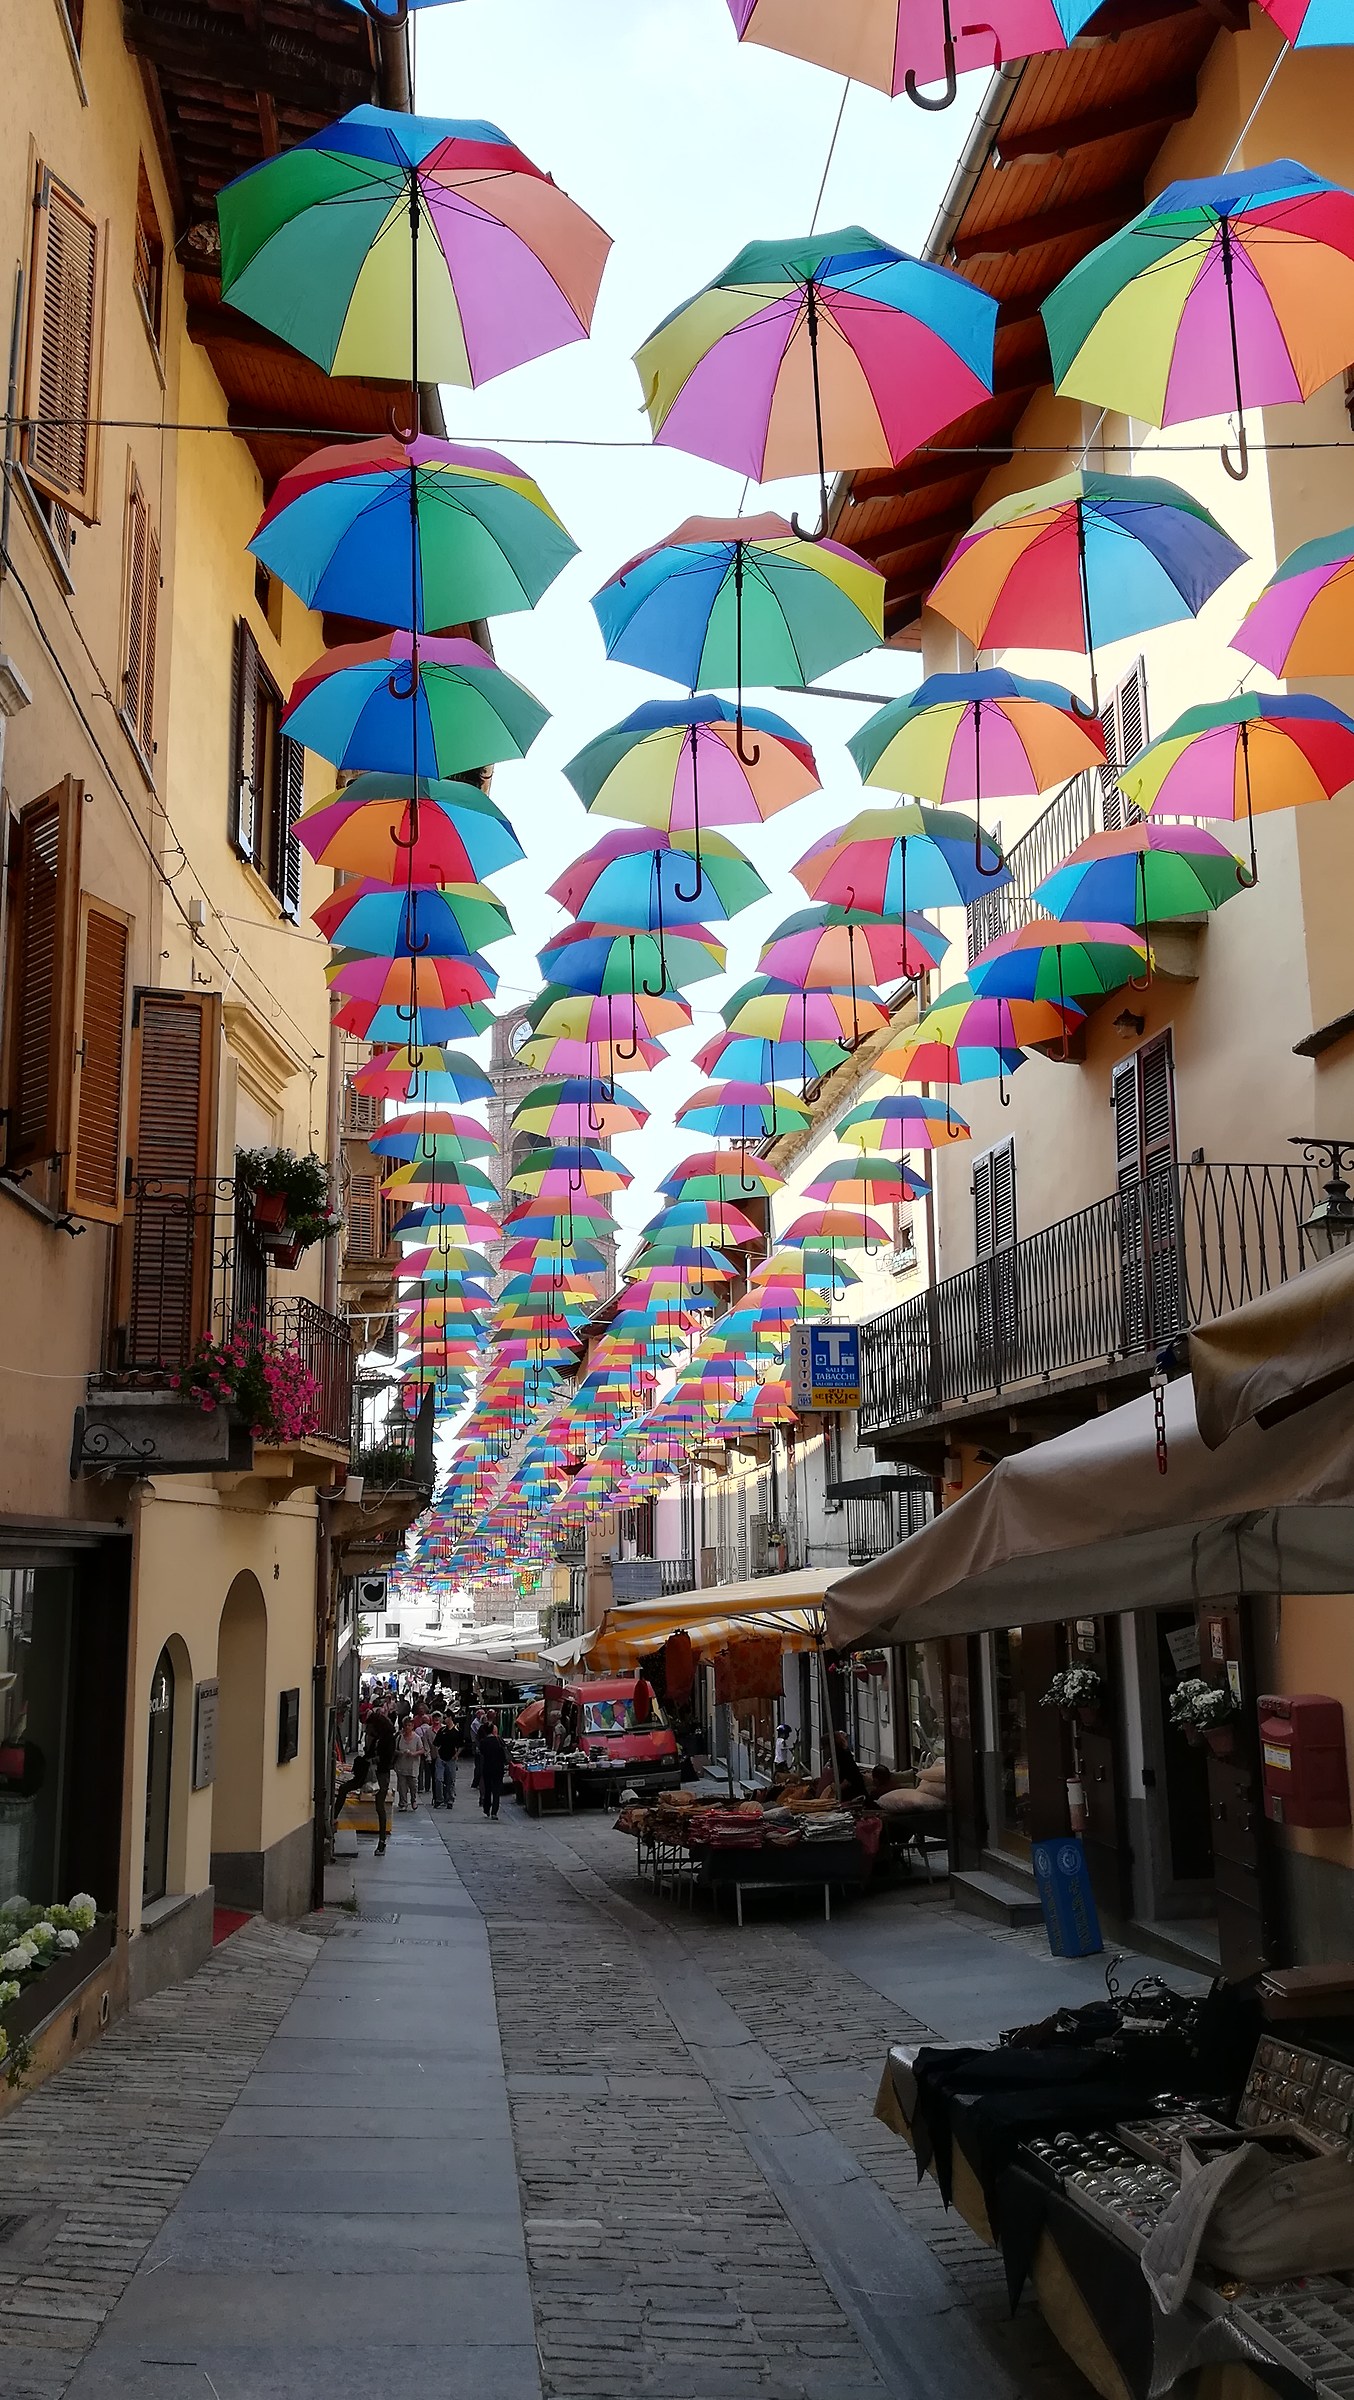 Umbrellas and umbrellas ...